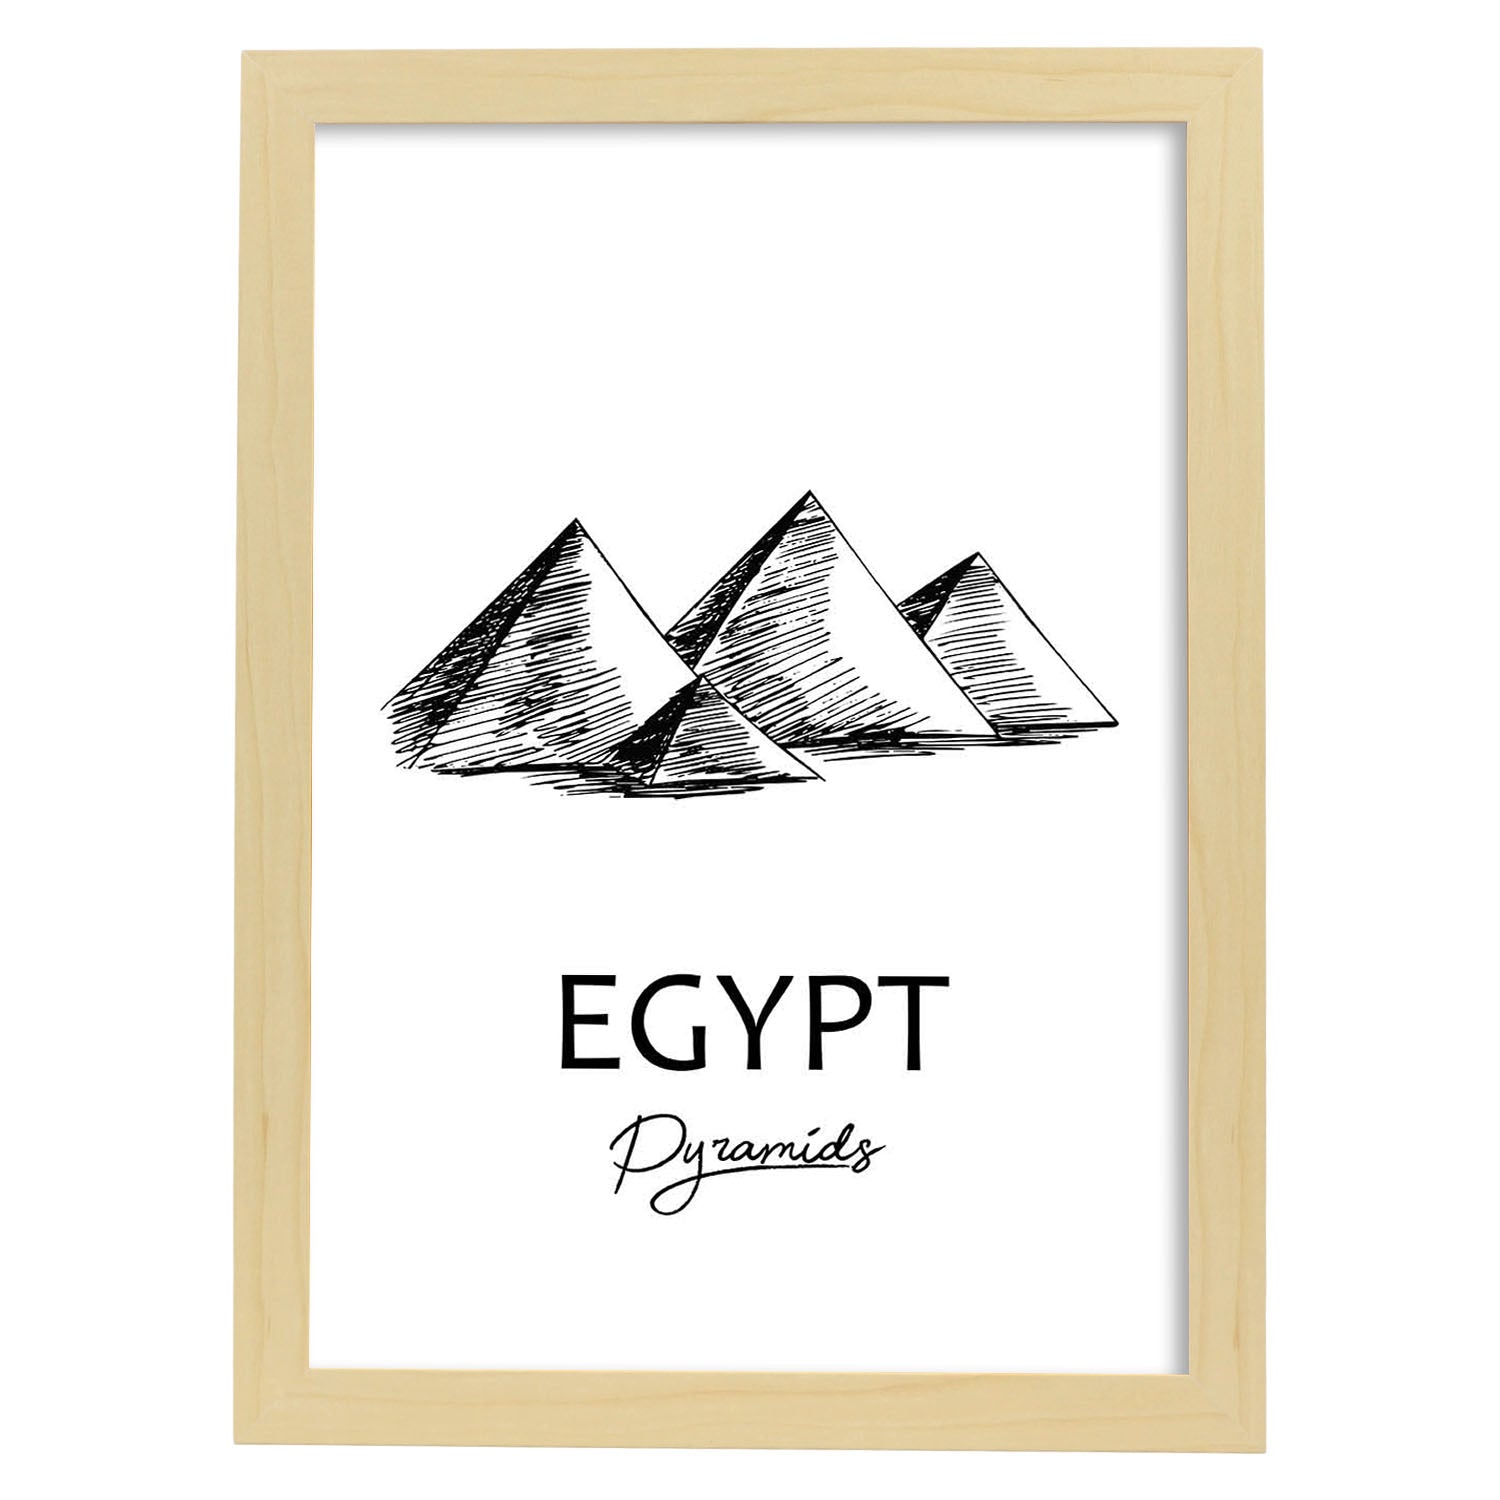 Poster de Egipto - Pirámides. Láminas con monumentos de ciudades.-Artwork-Nacnic-A4-Marco Madera clara-Nacnic Estudio SL